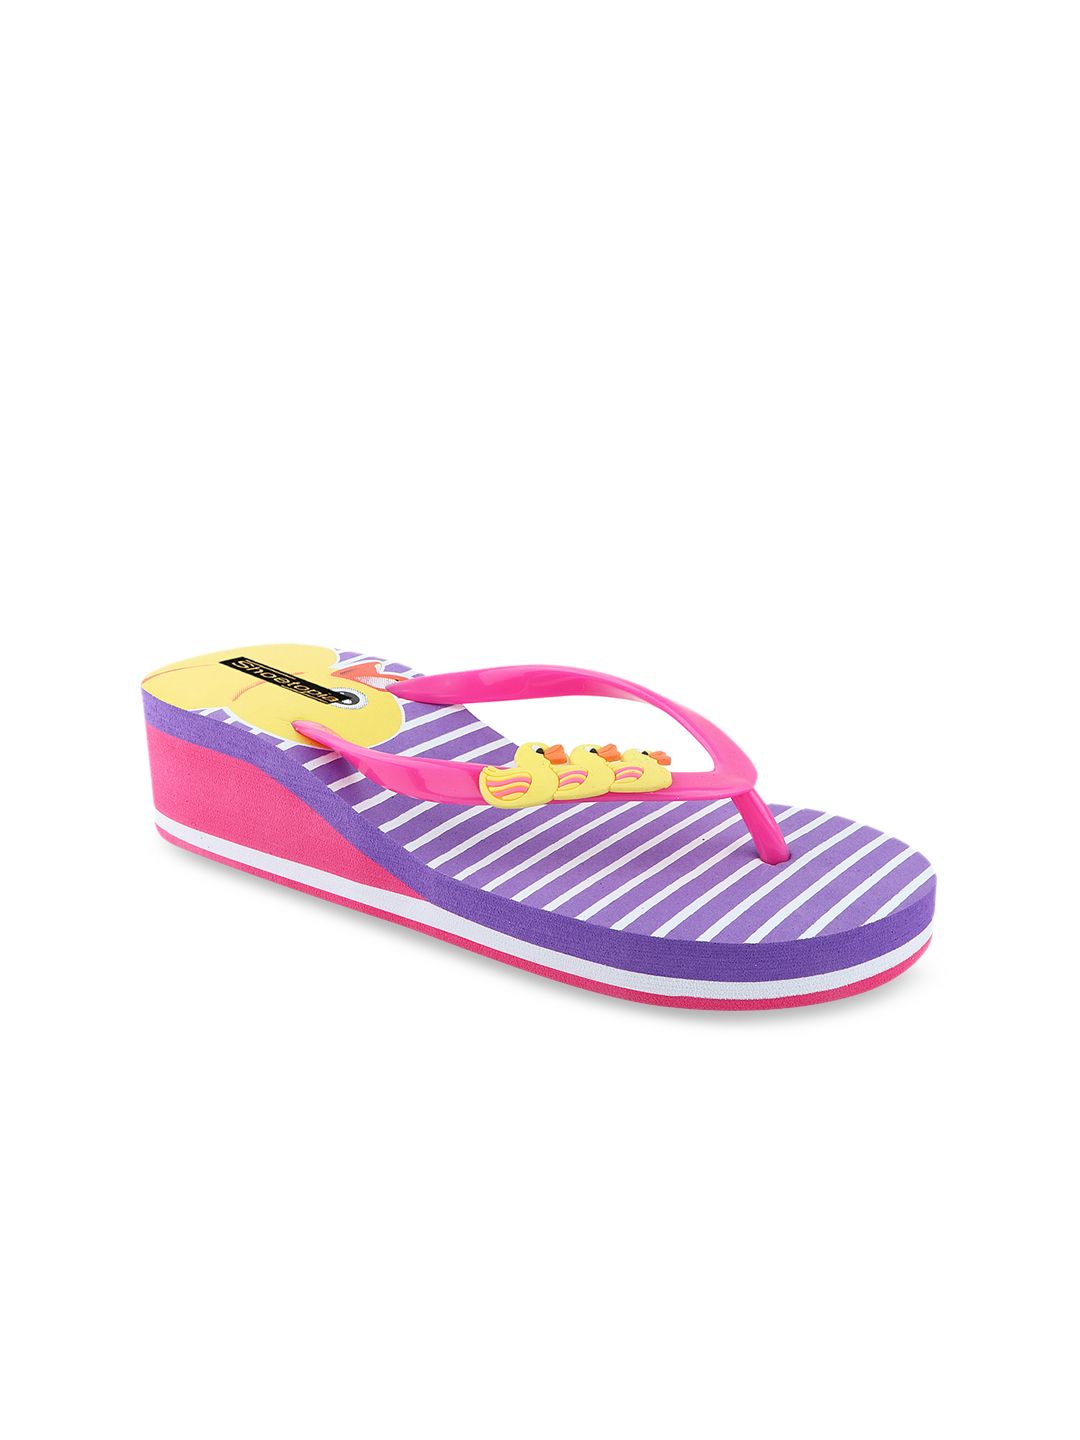 Shoetopia Women Pink & Yellow Striped Thong Flip-Flops Price in India